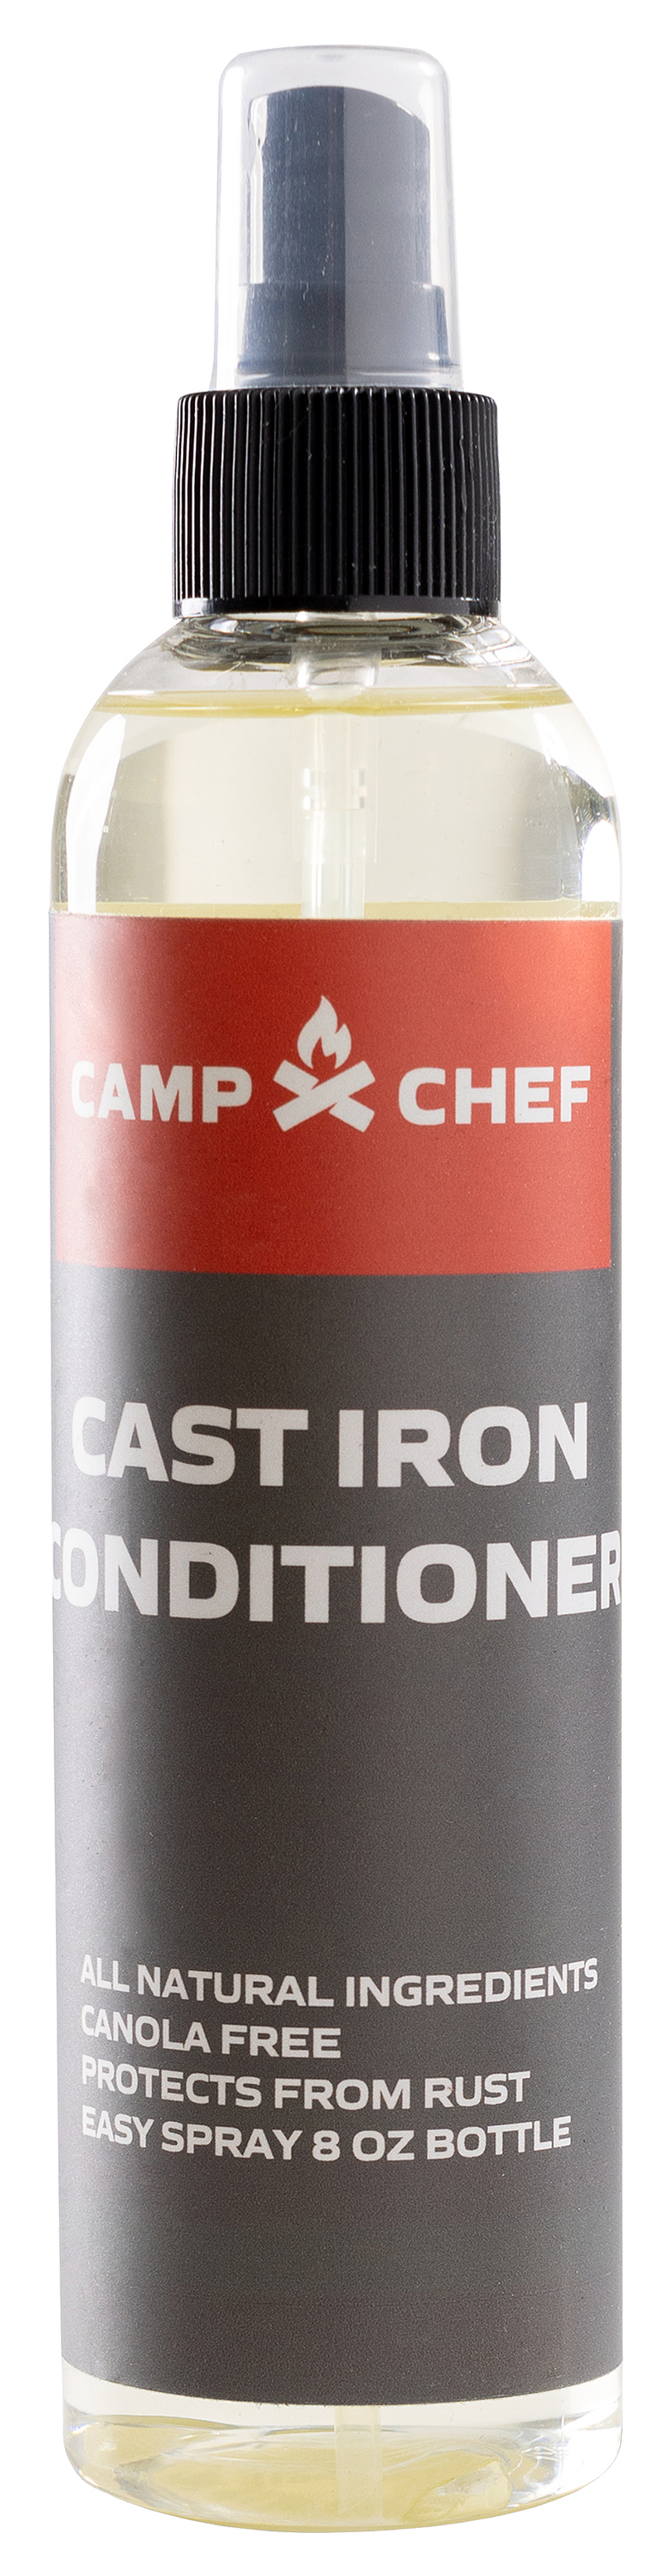 Camp Chef Cast Iron Conditioner